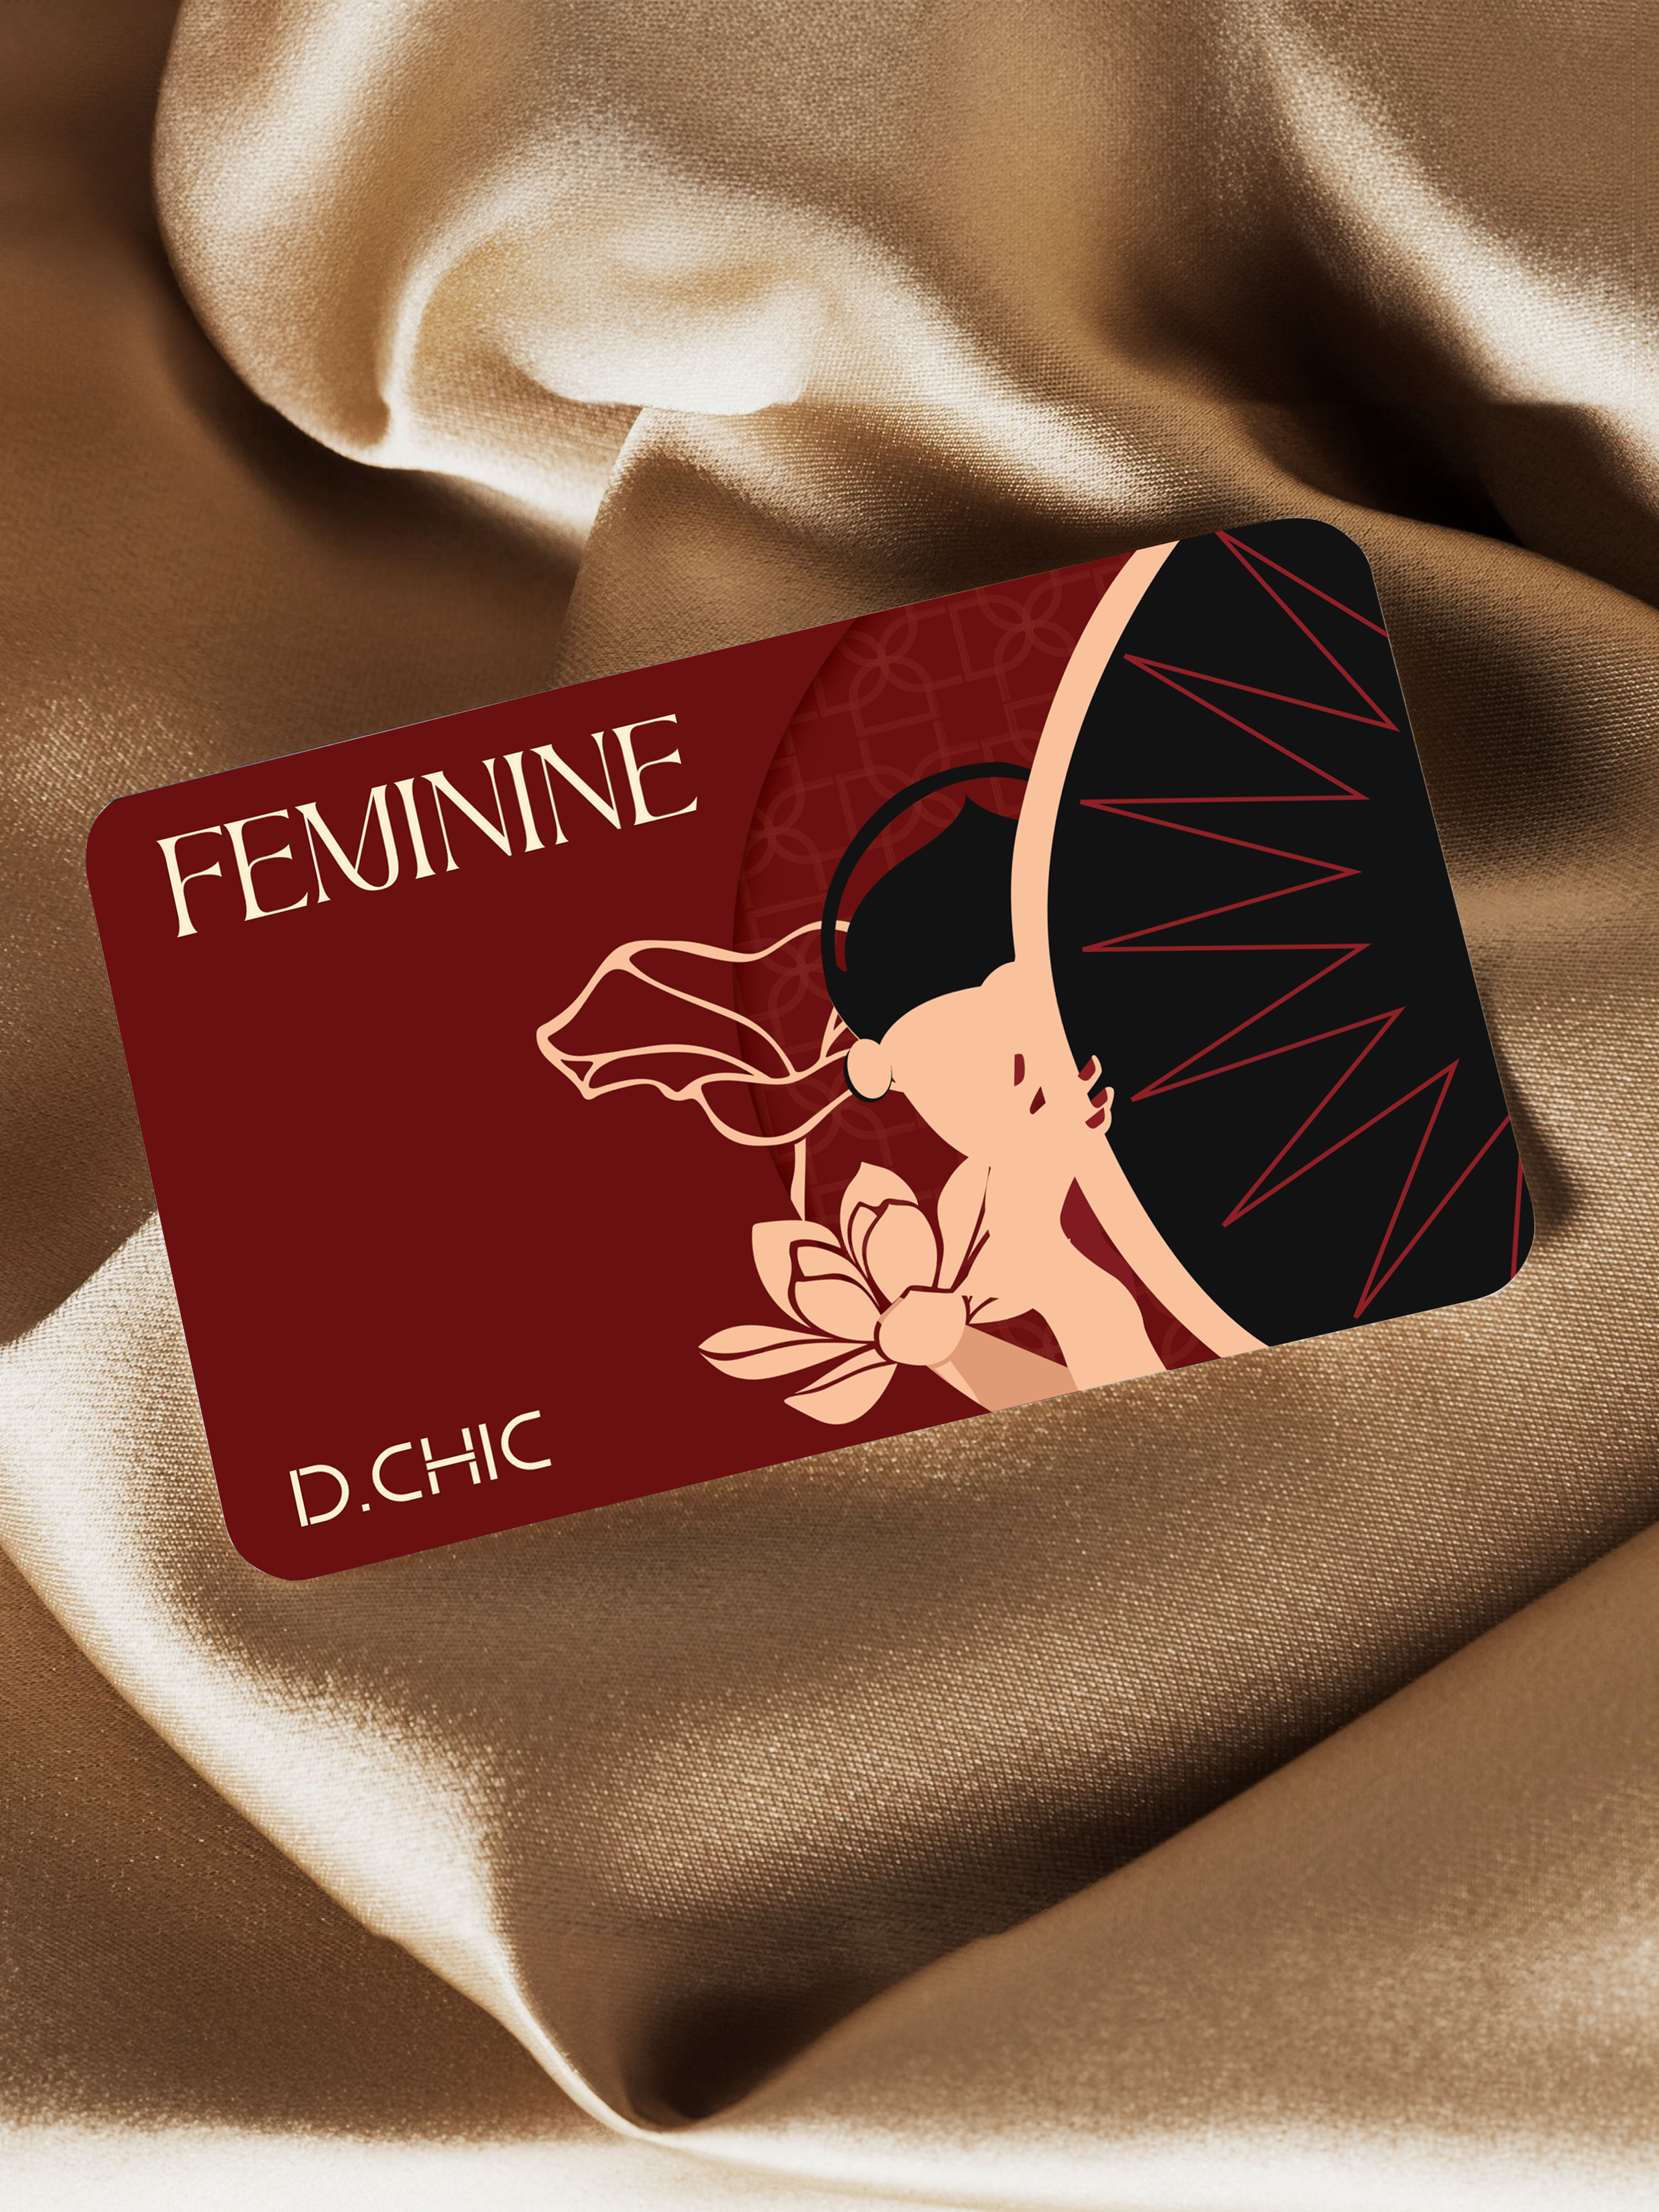 dgift-feminine-1-7735374